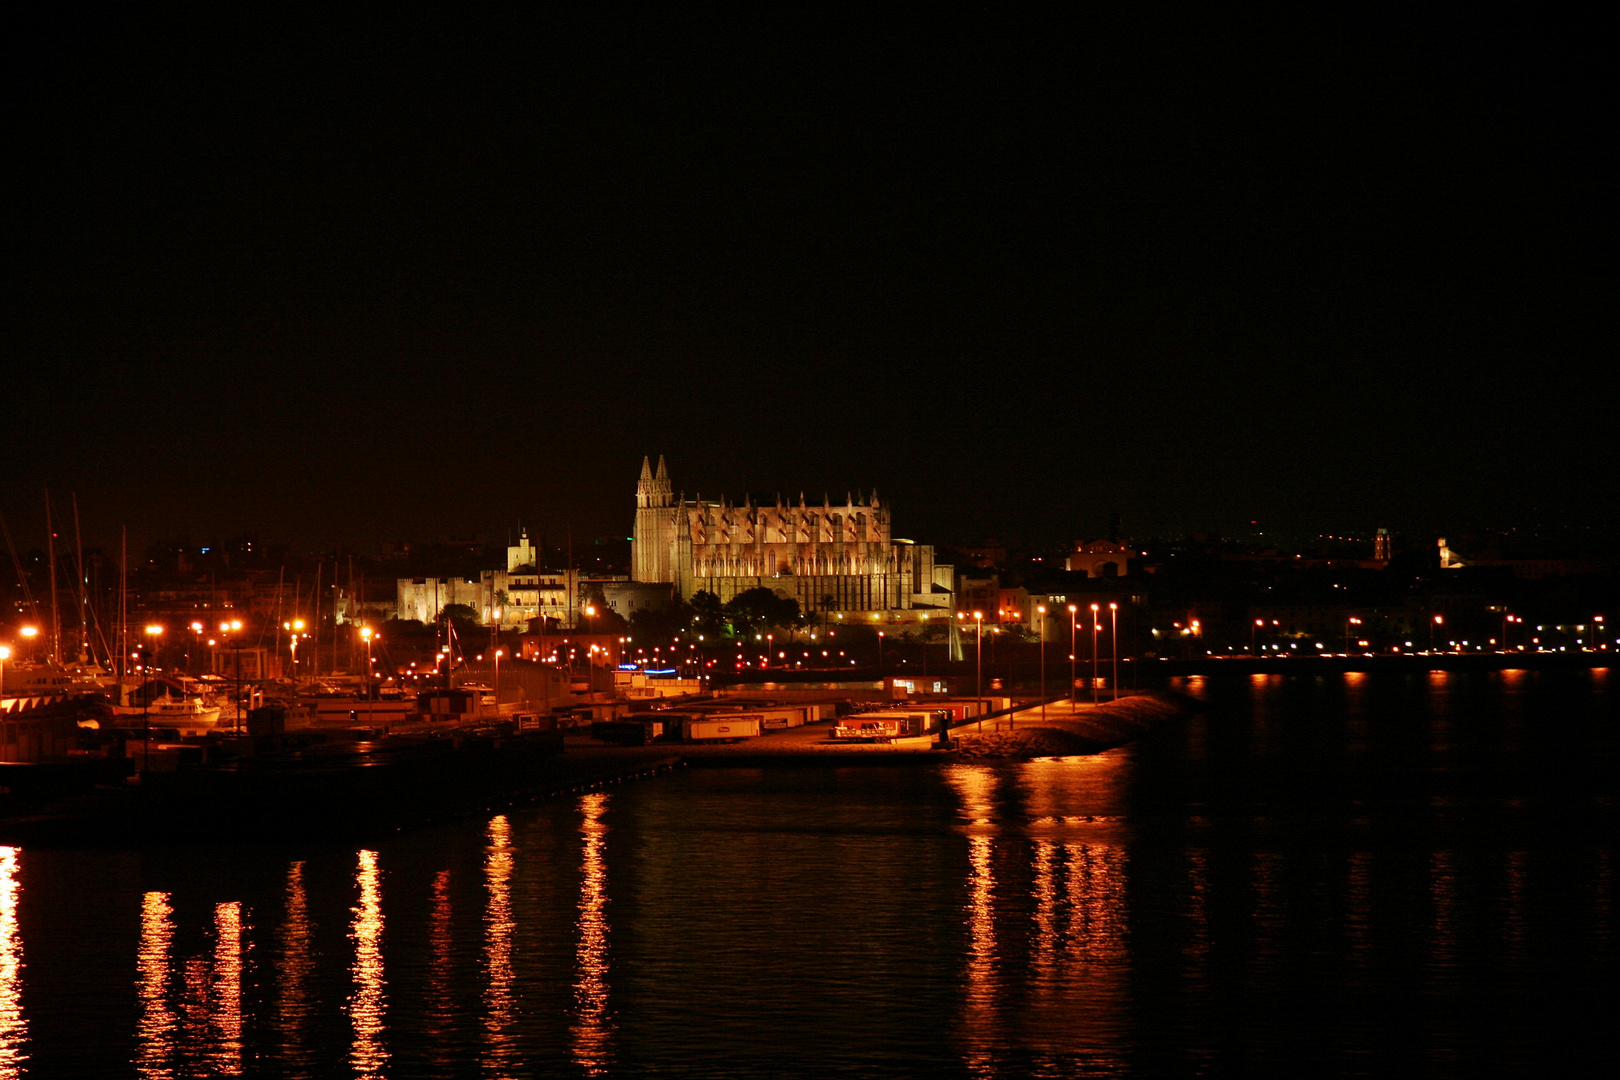 Palma bei Nacht